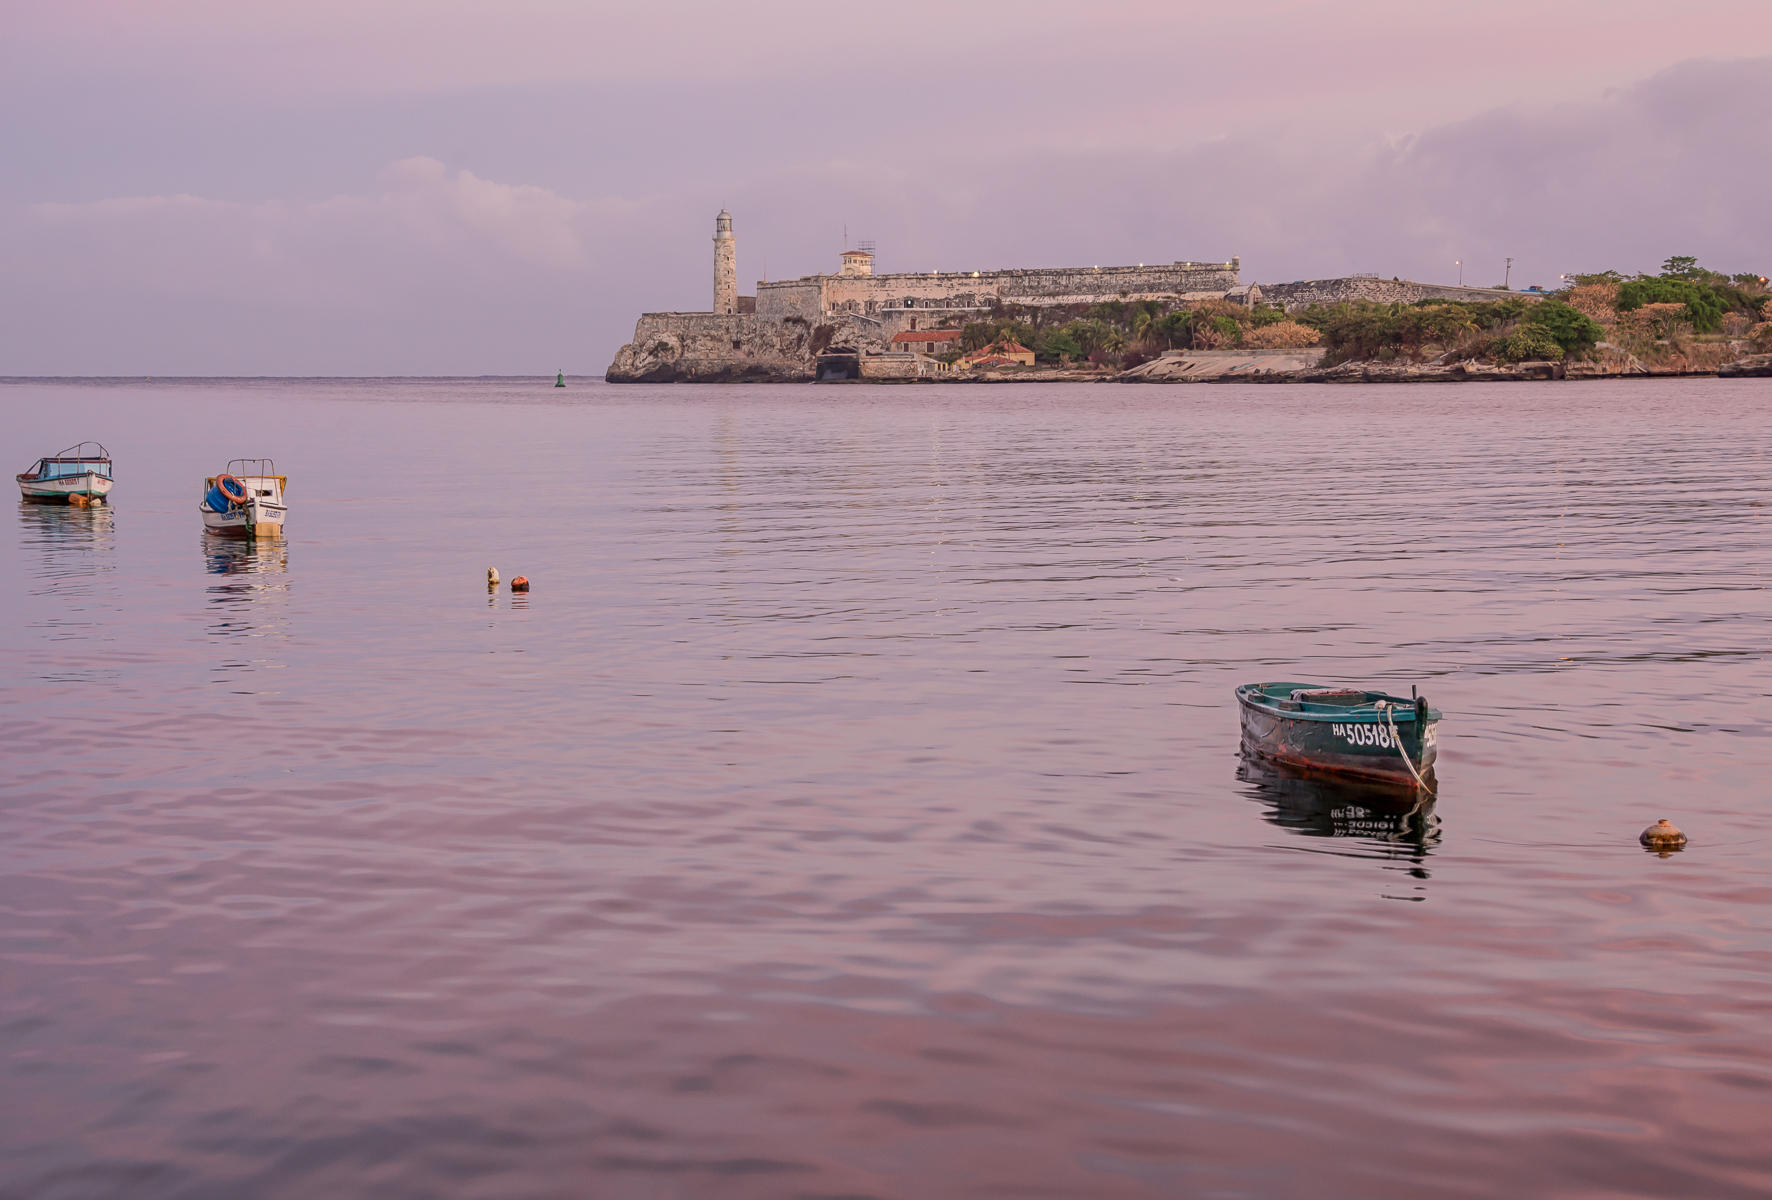 Havana Harbor at sunrise : Recuerdos de mi Abuela : ELIZABETH SANJUAN PHOTOGRAPHY